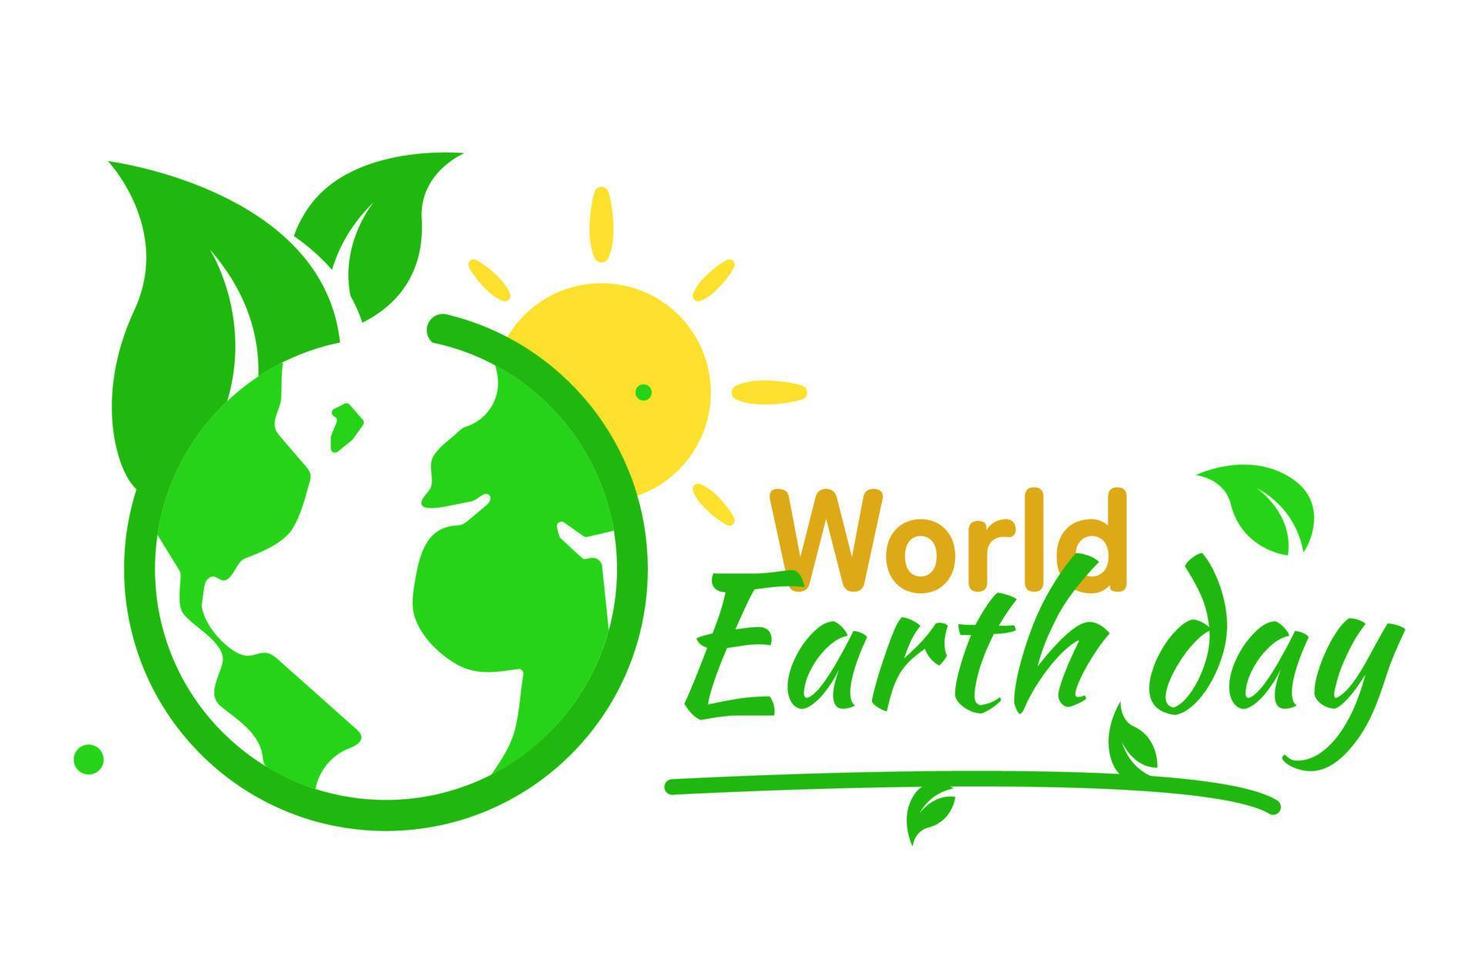 Grün Welt, Erde mit Blatt Logo, Ökologie freundlich Umwelt Konzept Illustration eben Design Vektor Folge10. modern Grafik Element zum Infografik, Symbol, Poster, Banner